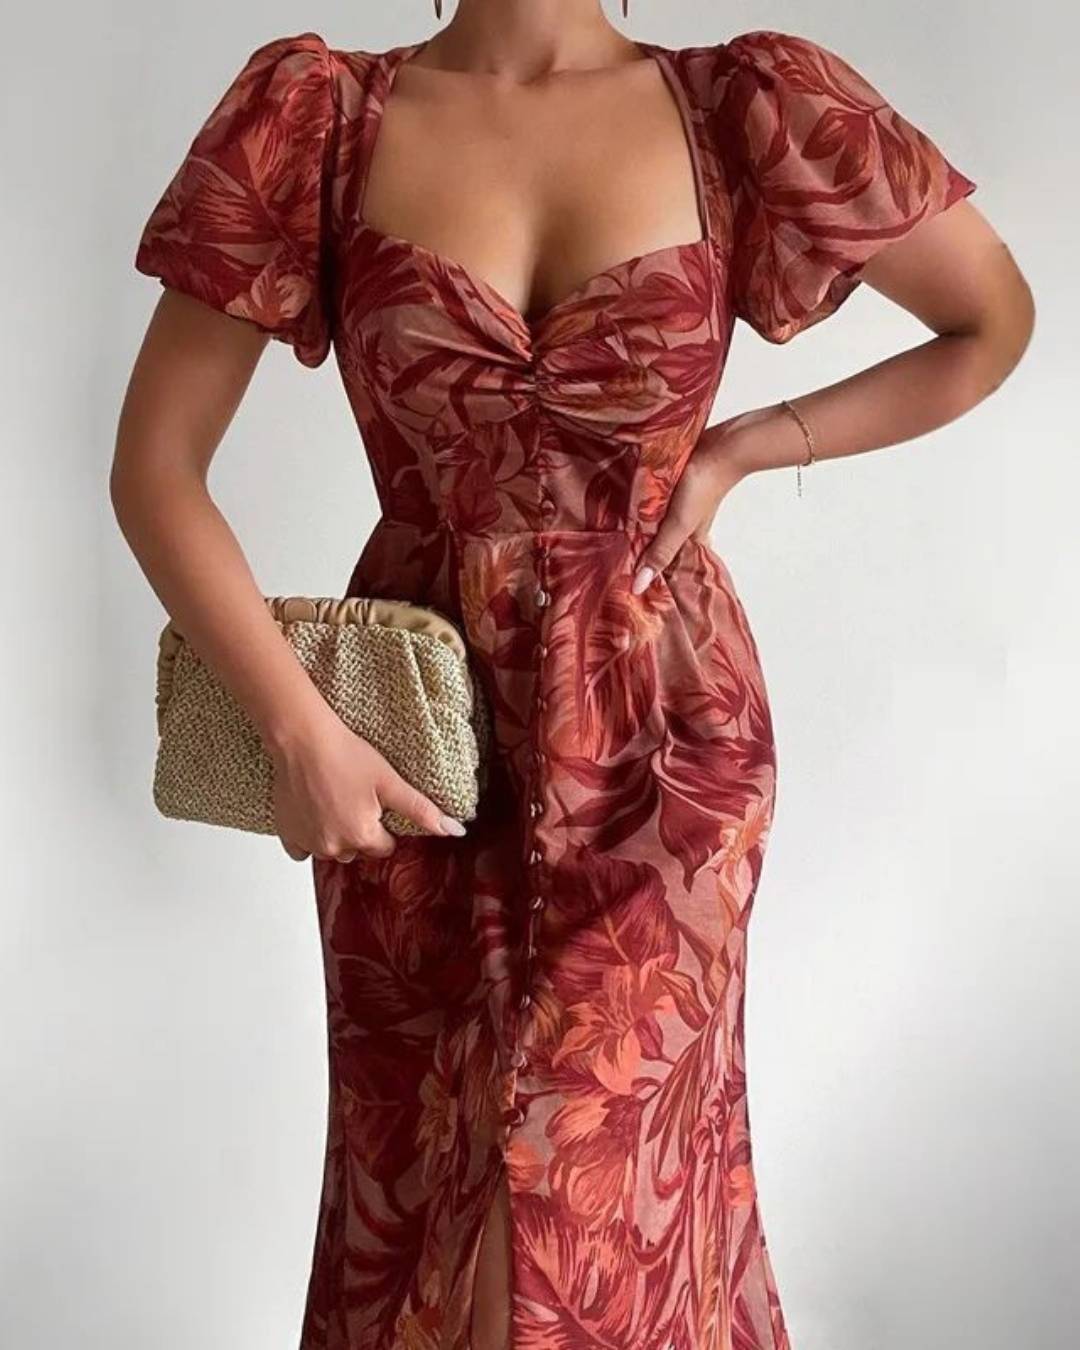 Floral Print Button Dress